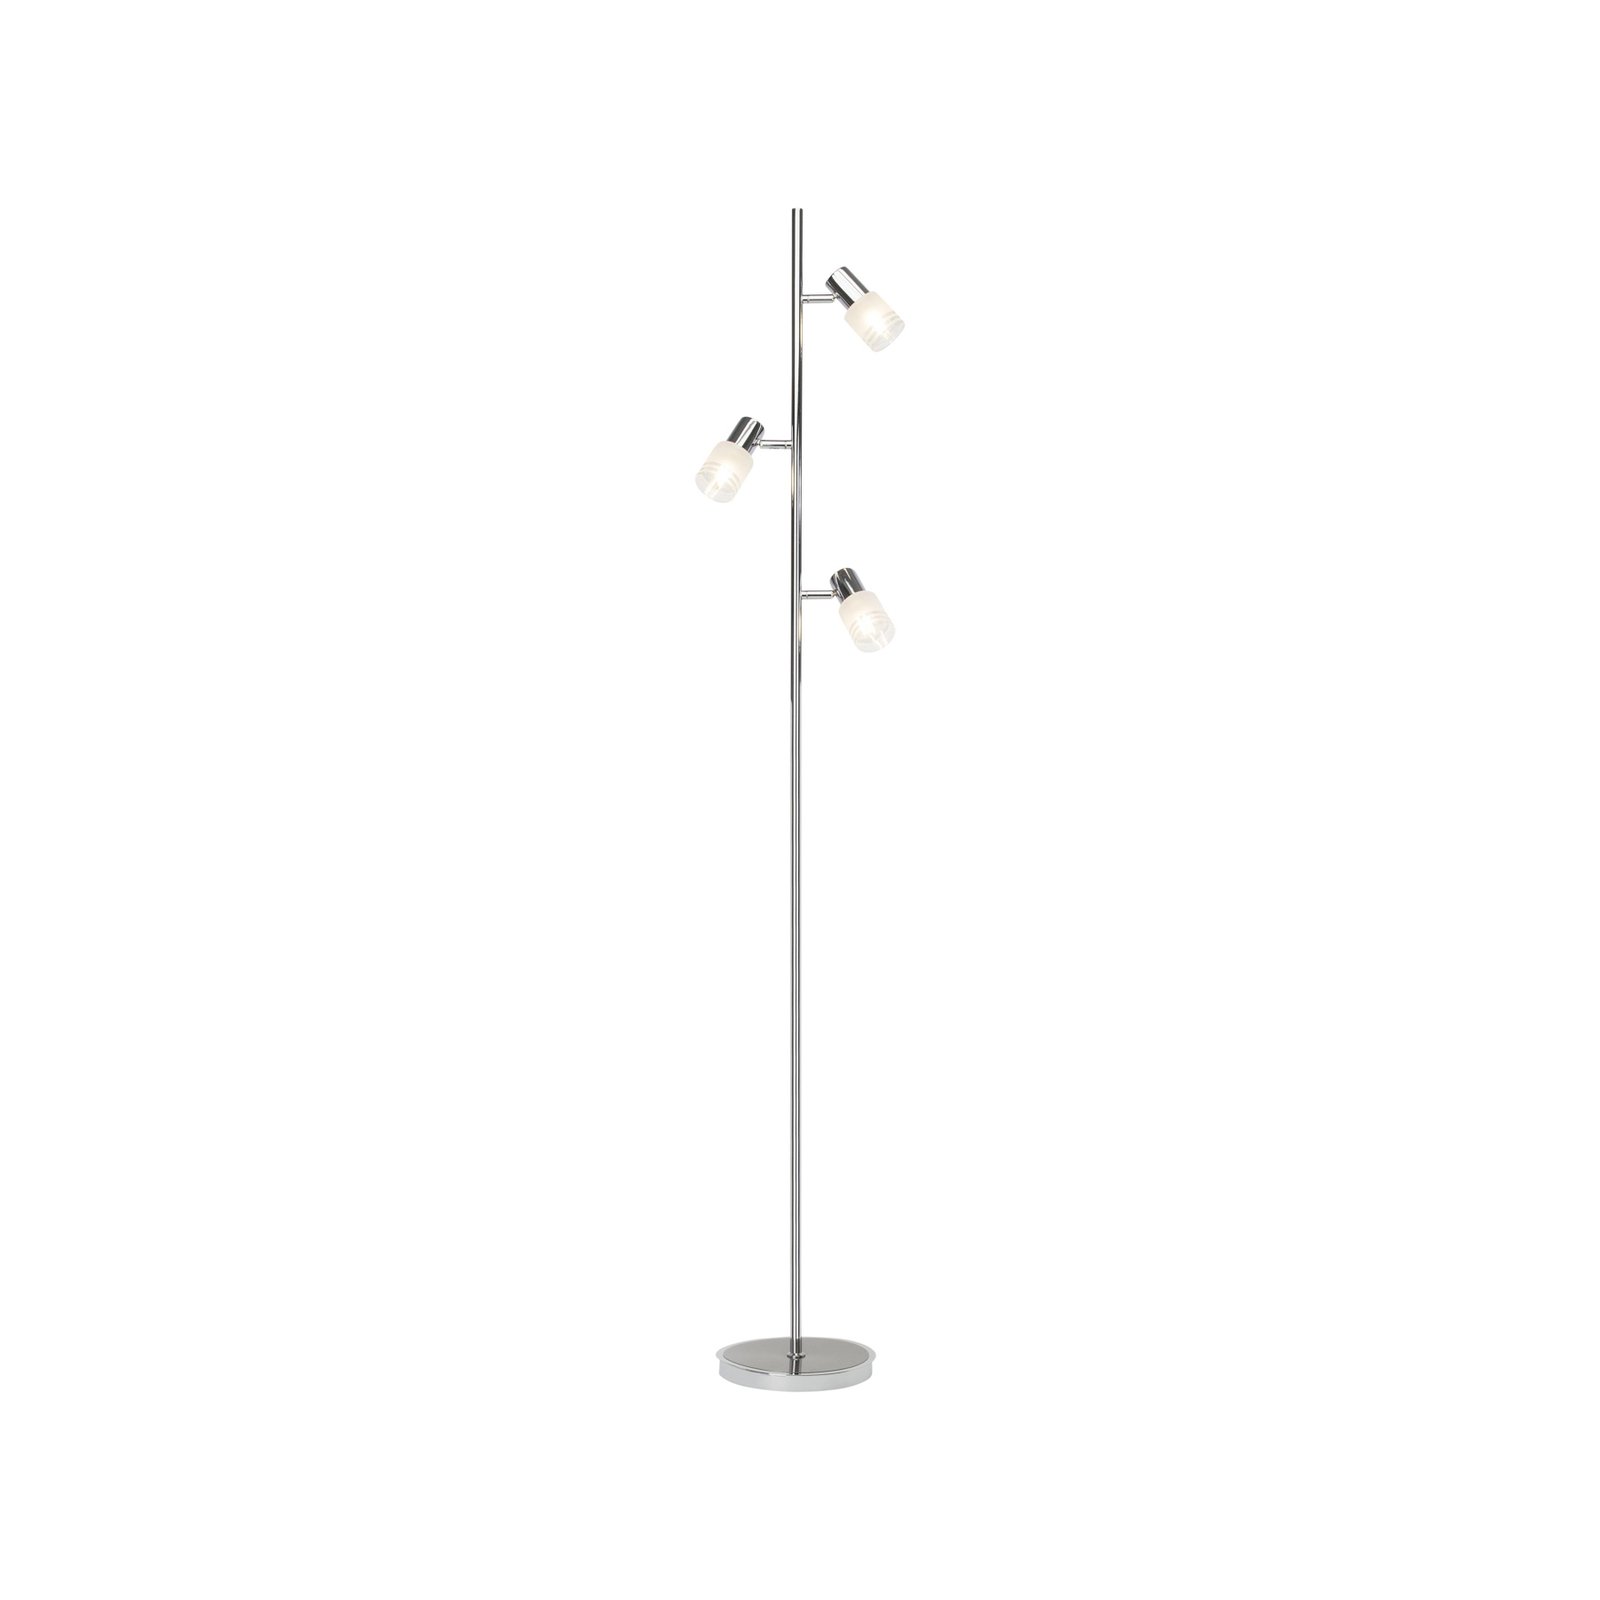 LED-Stehleuchte Lea, Höhe 157,5 cm, chrom, 3-flg., Metall